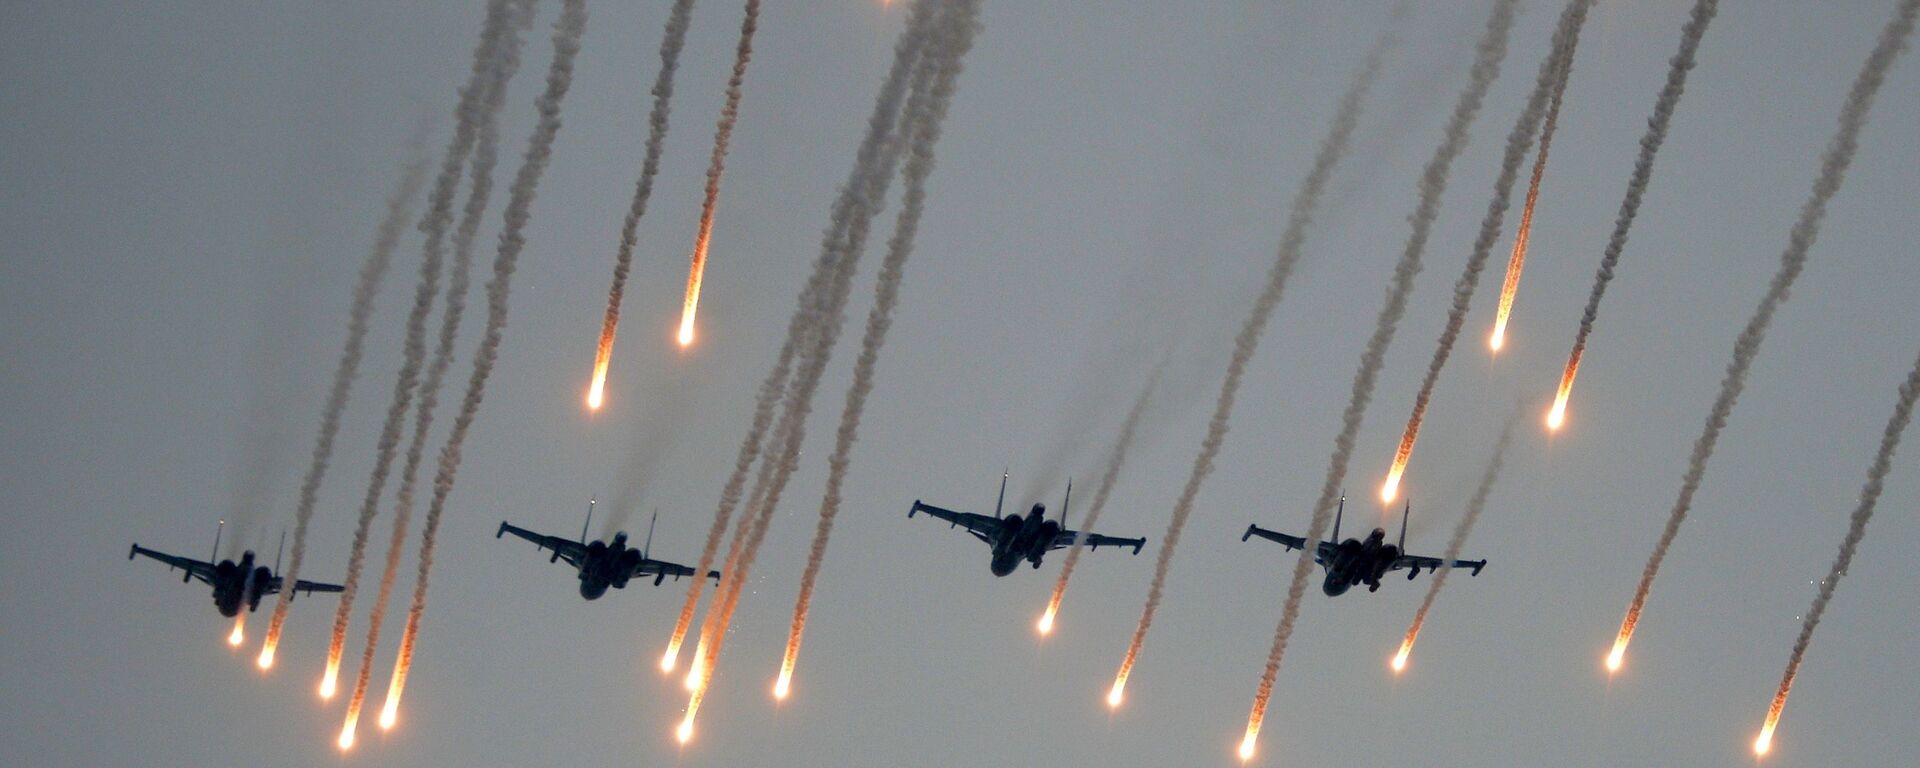 Lėktuvai danguje virš treniruočių aikštelės Minsko srityje - Sputnik Lietuva, 1920, 09.08.2021